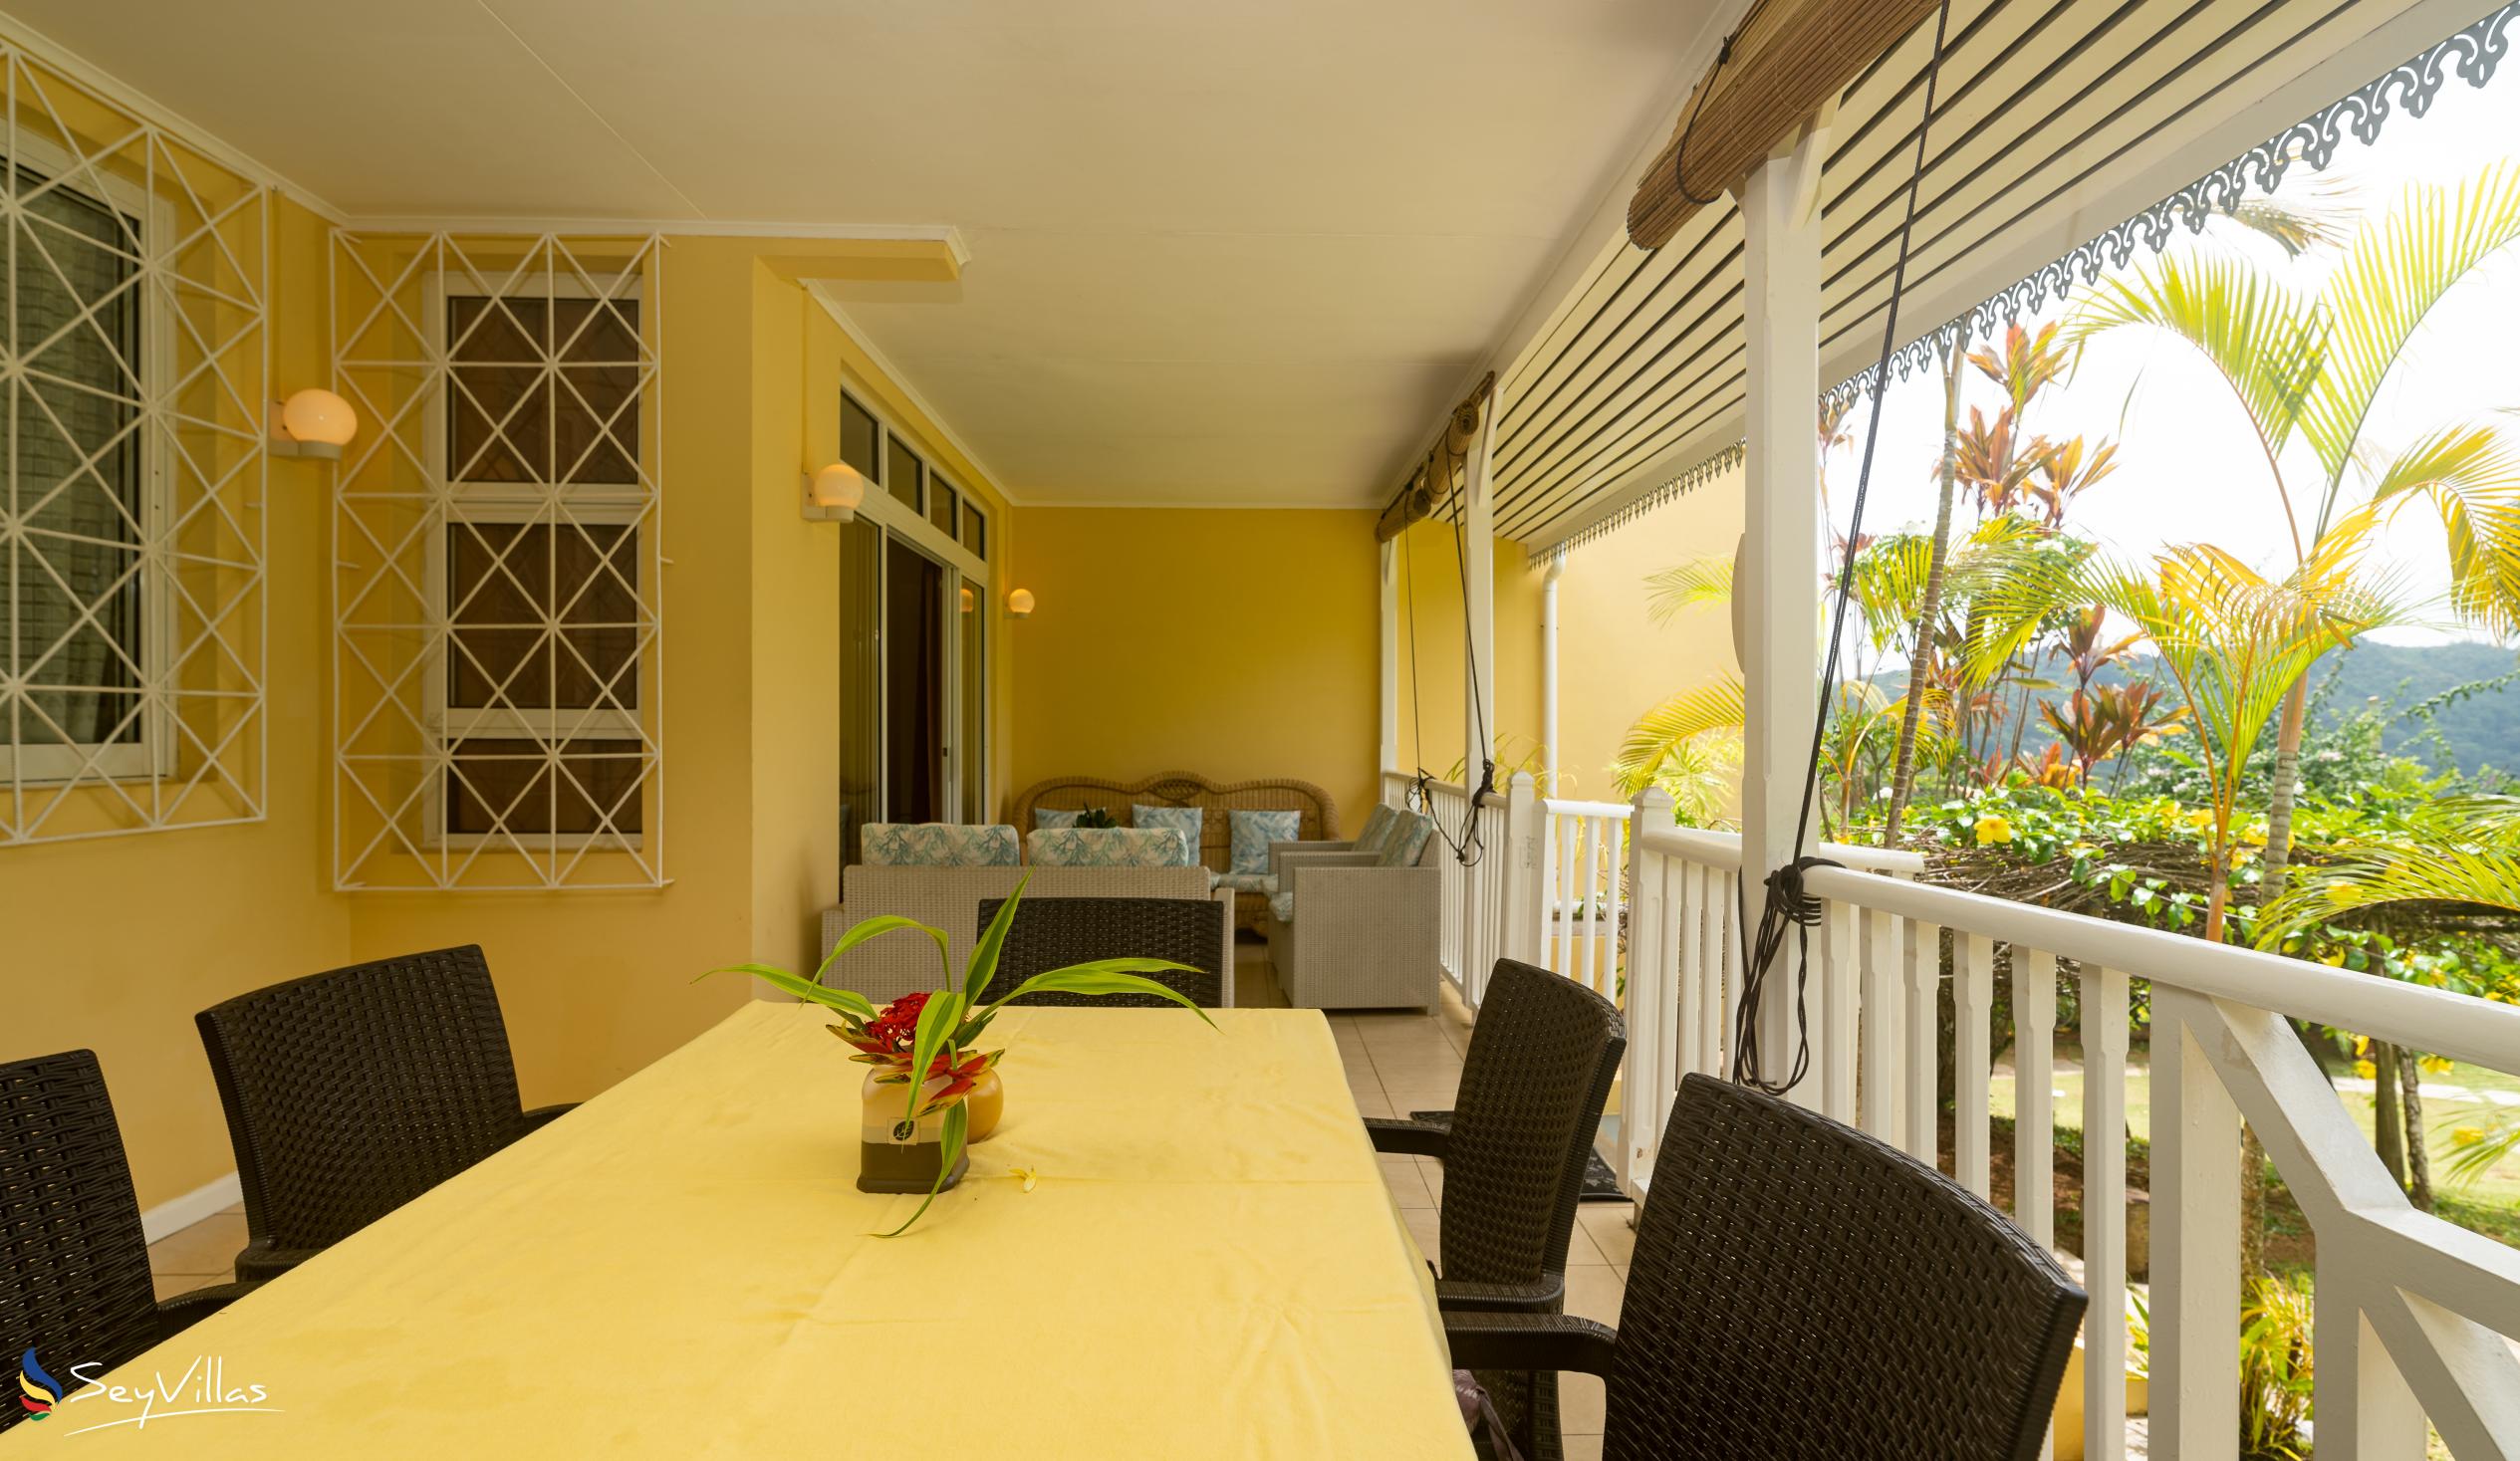 Photo 85: Residence Monte Cristo - 3-Bedroom Duplex - Mahé (Seychelles)